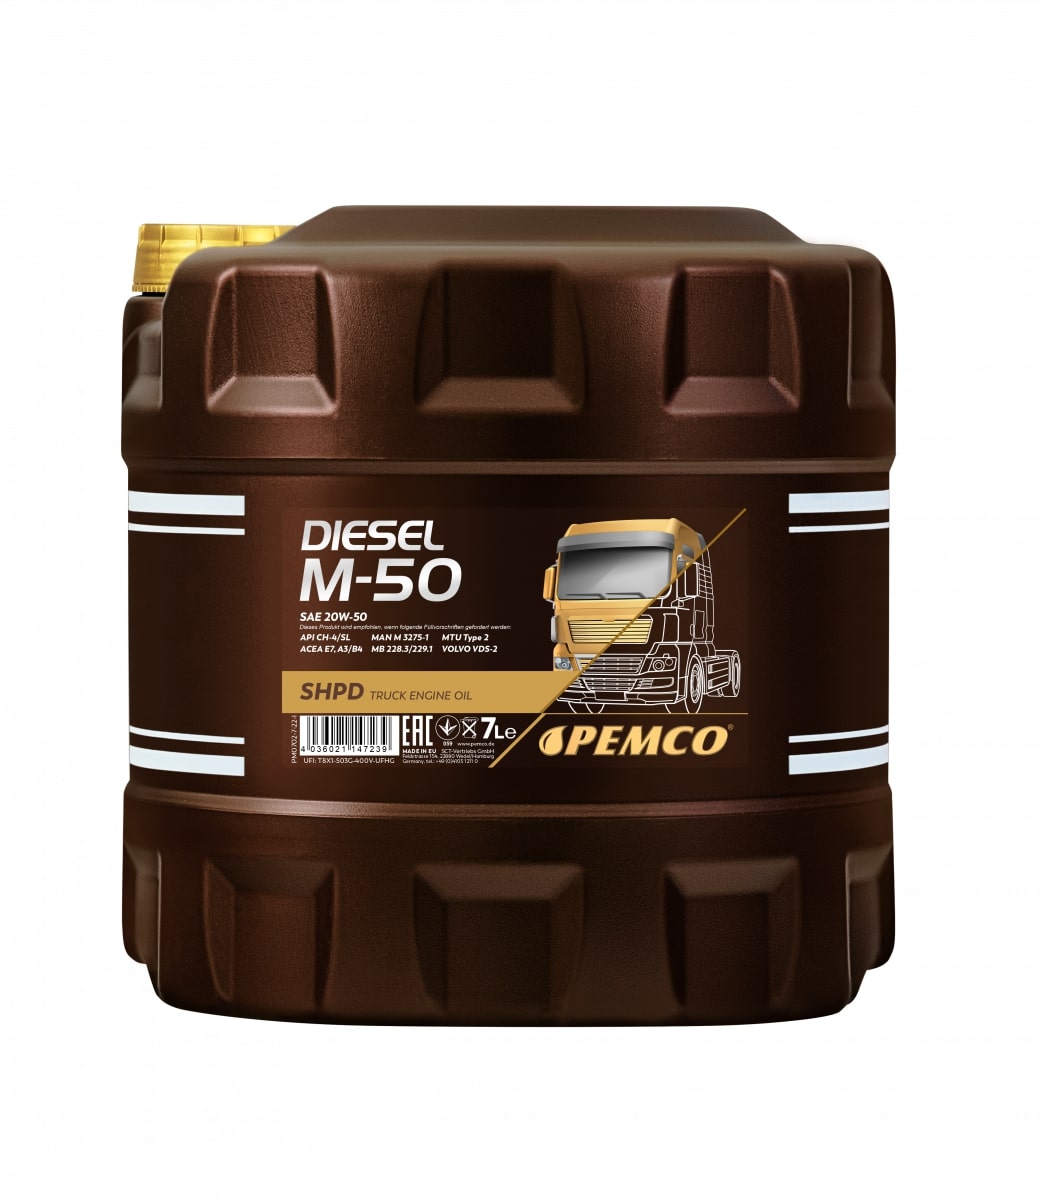 PEMCO DIESEL M-50 SHPD 20W-50